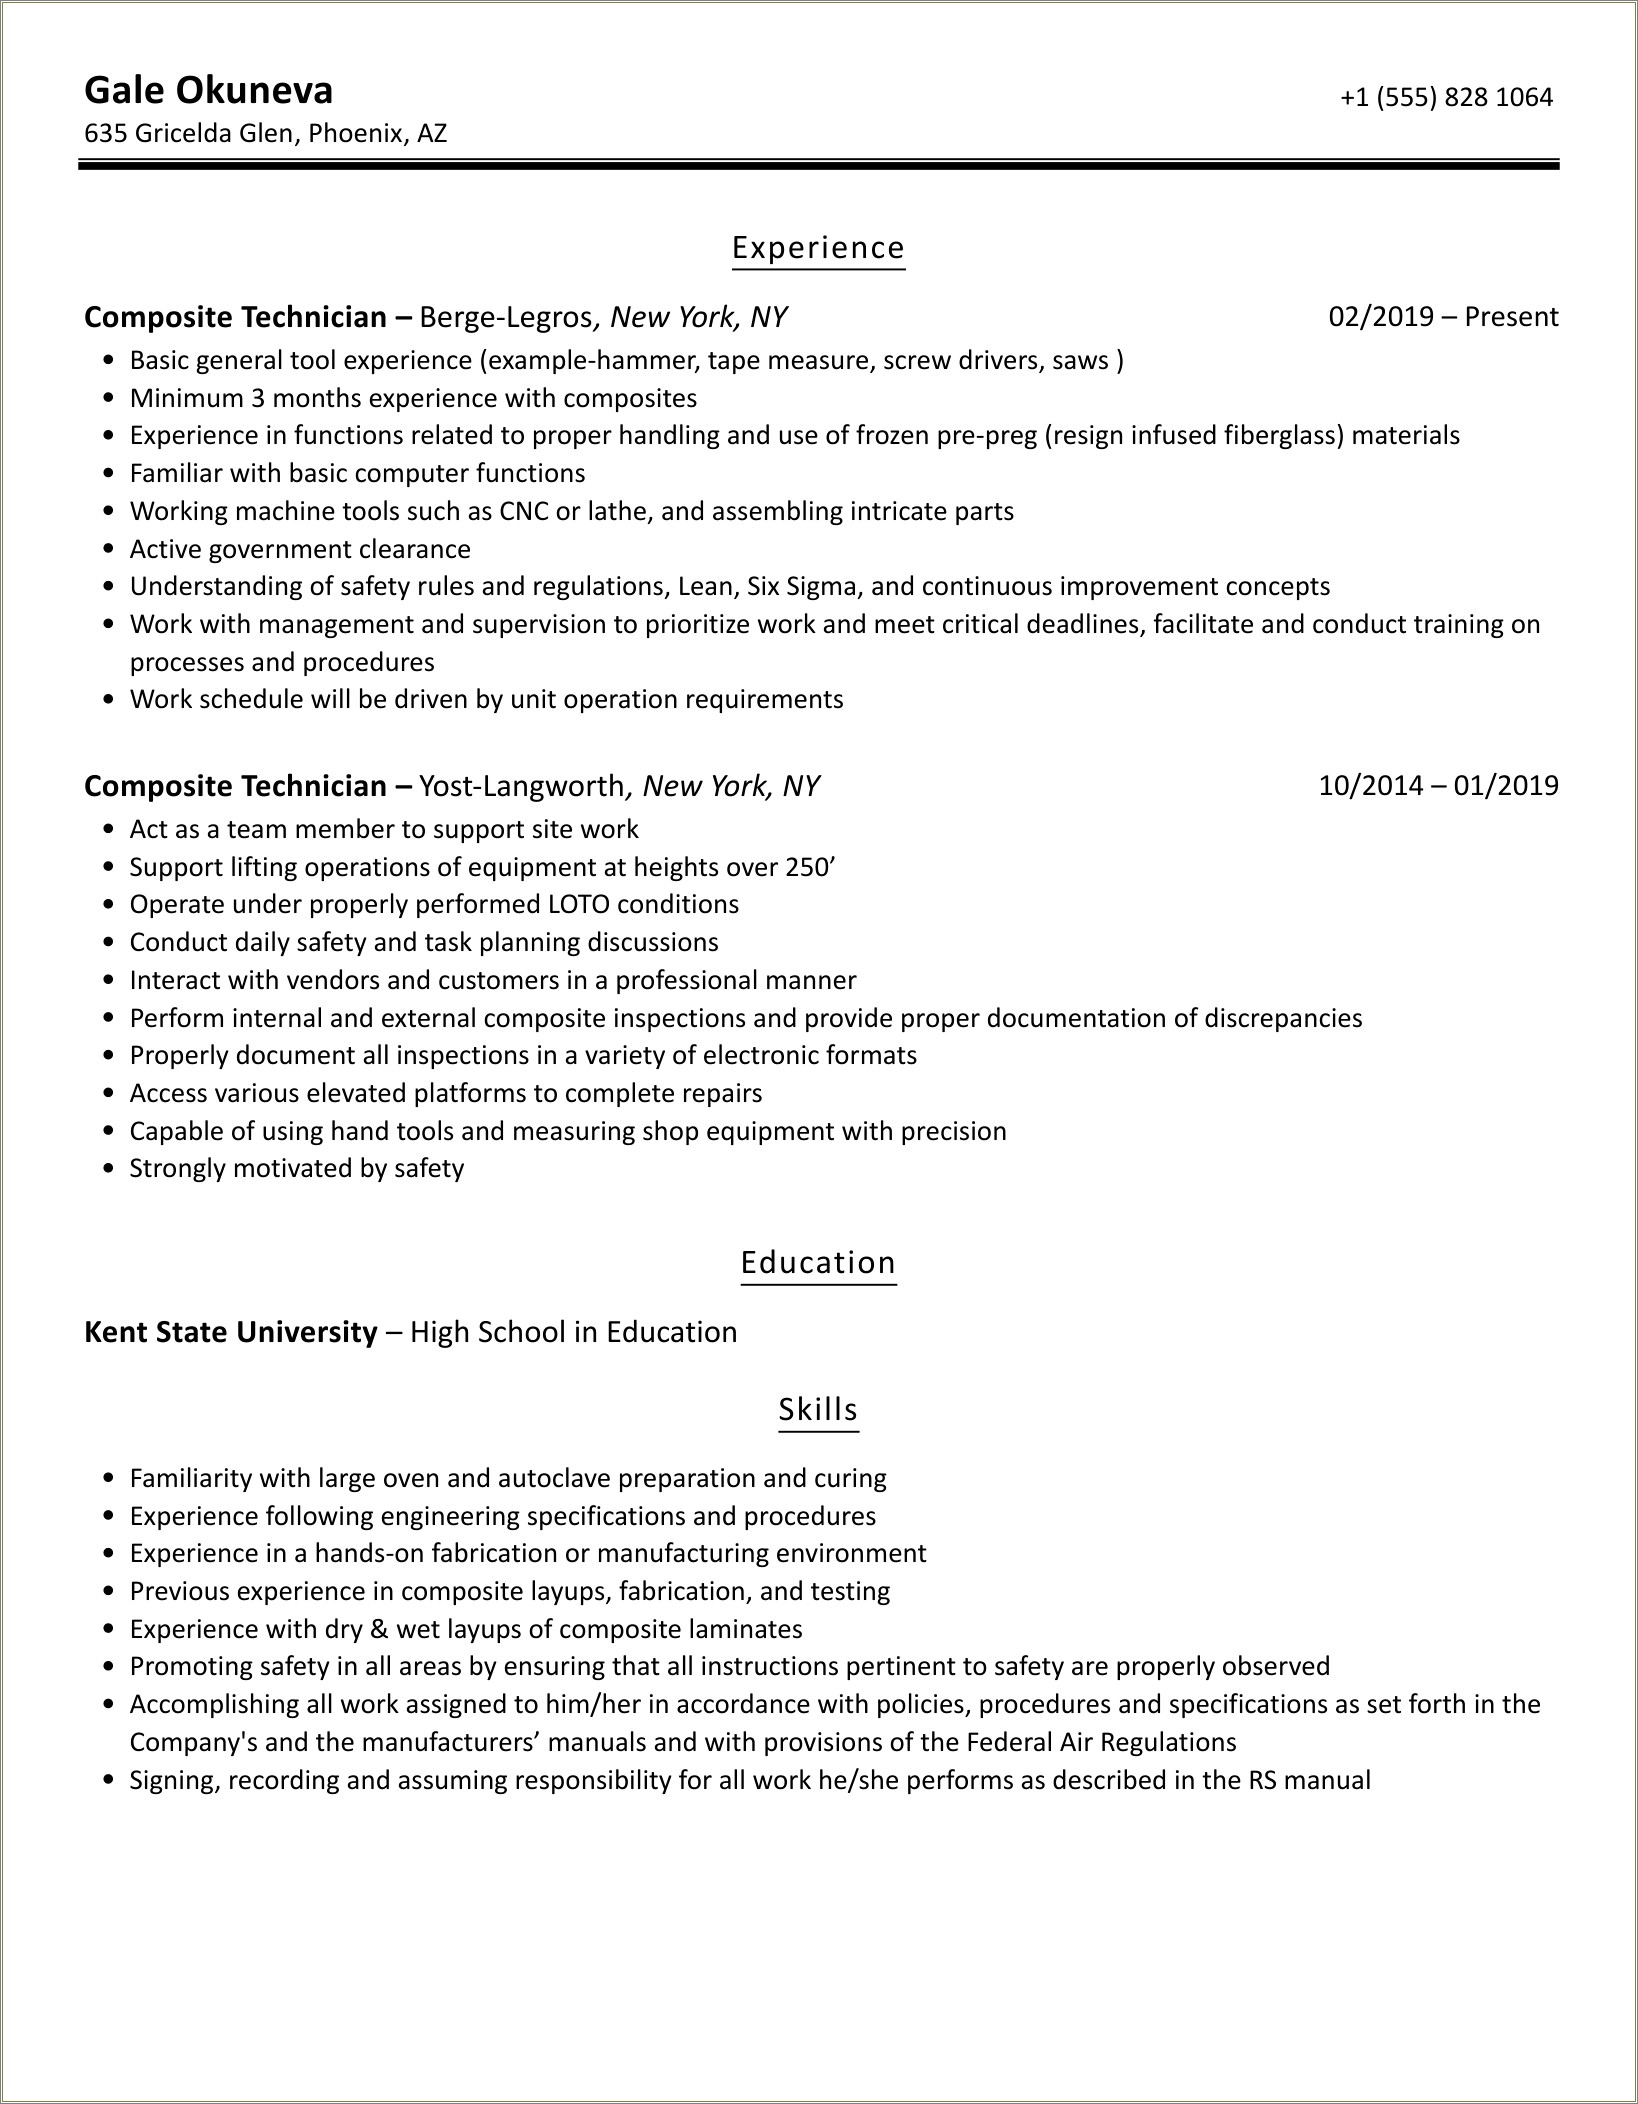 Sample Resume For Professional Composite Technician